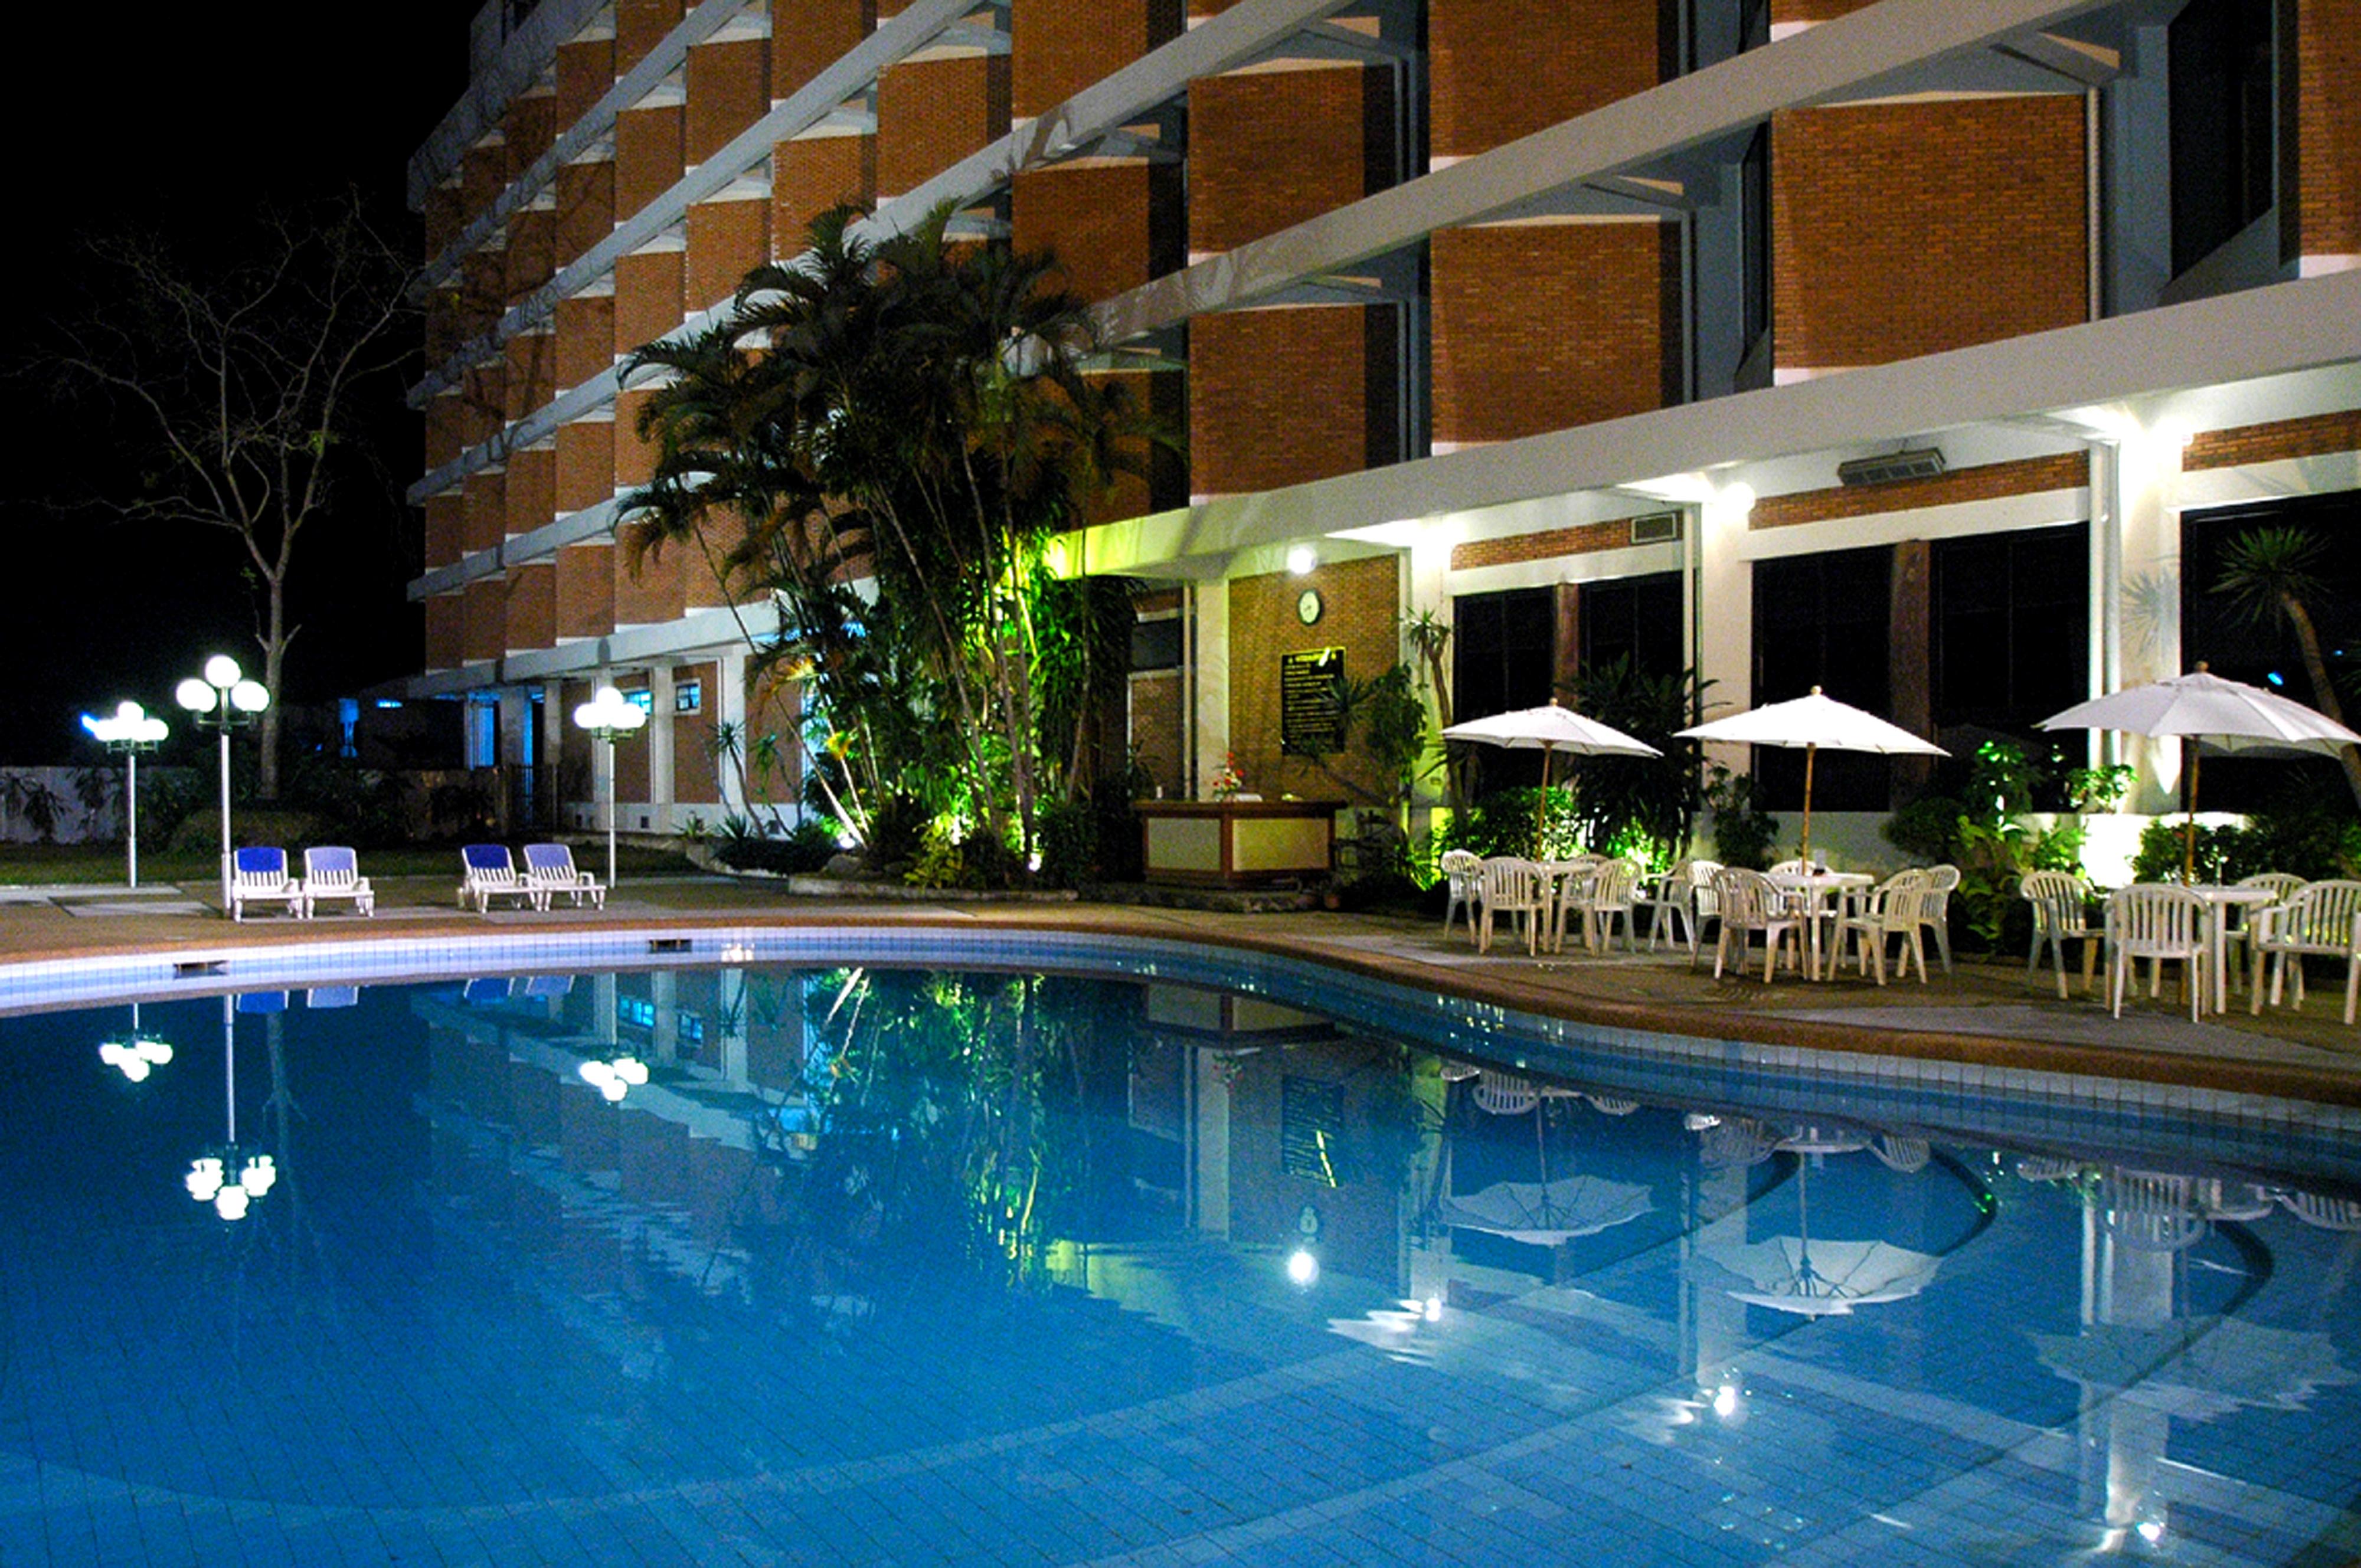 Wiang Inn Hotel image